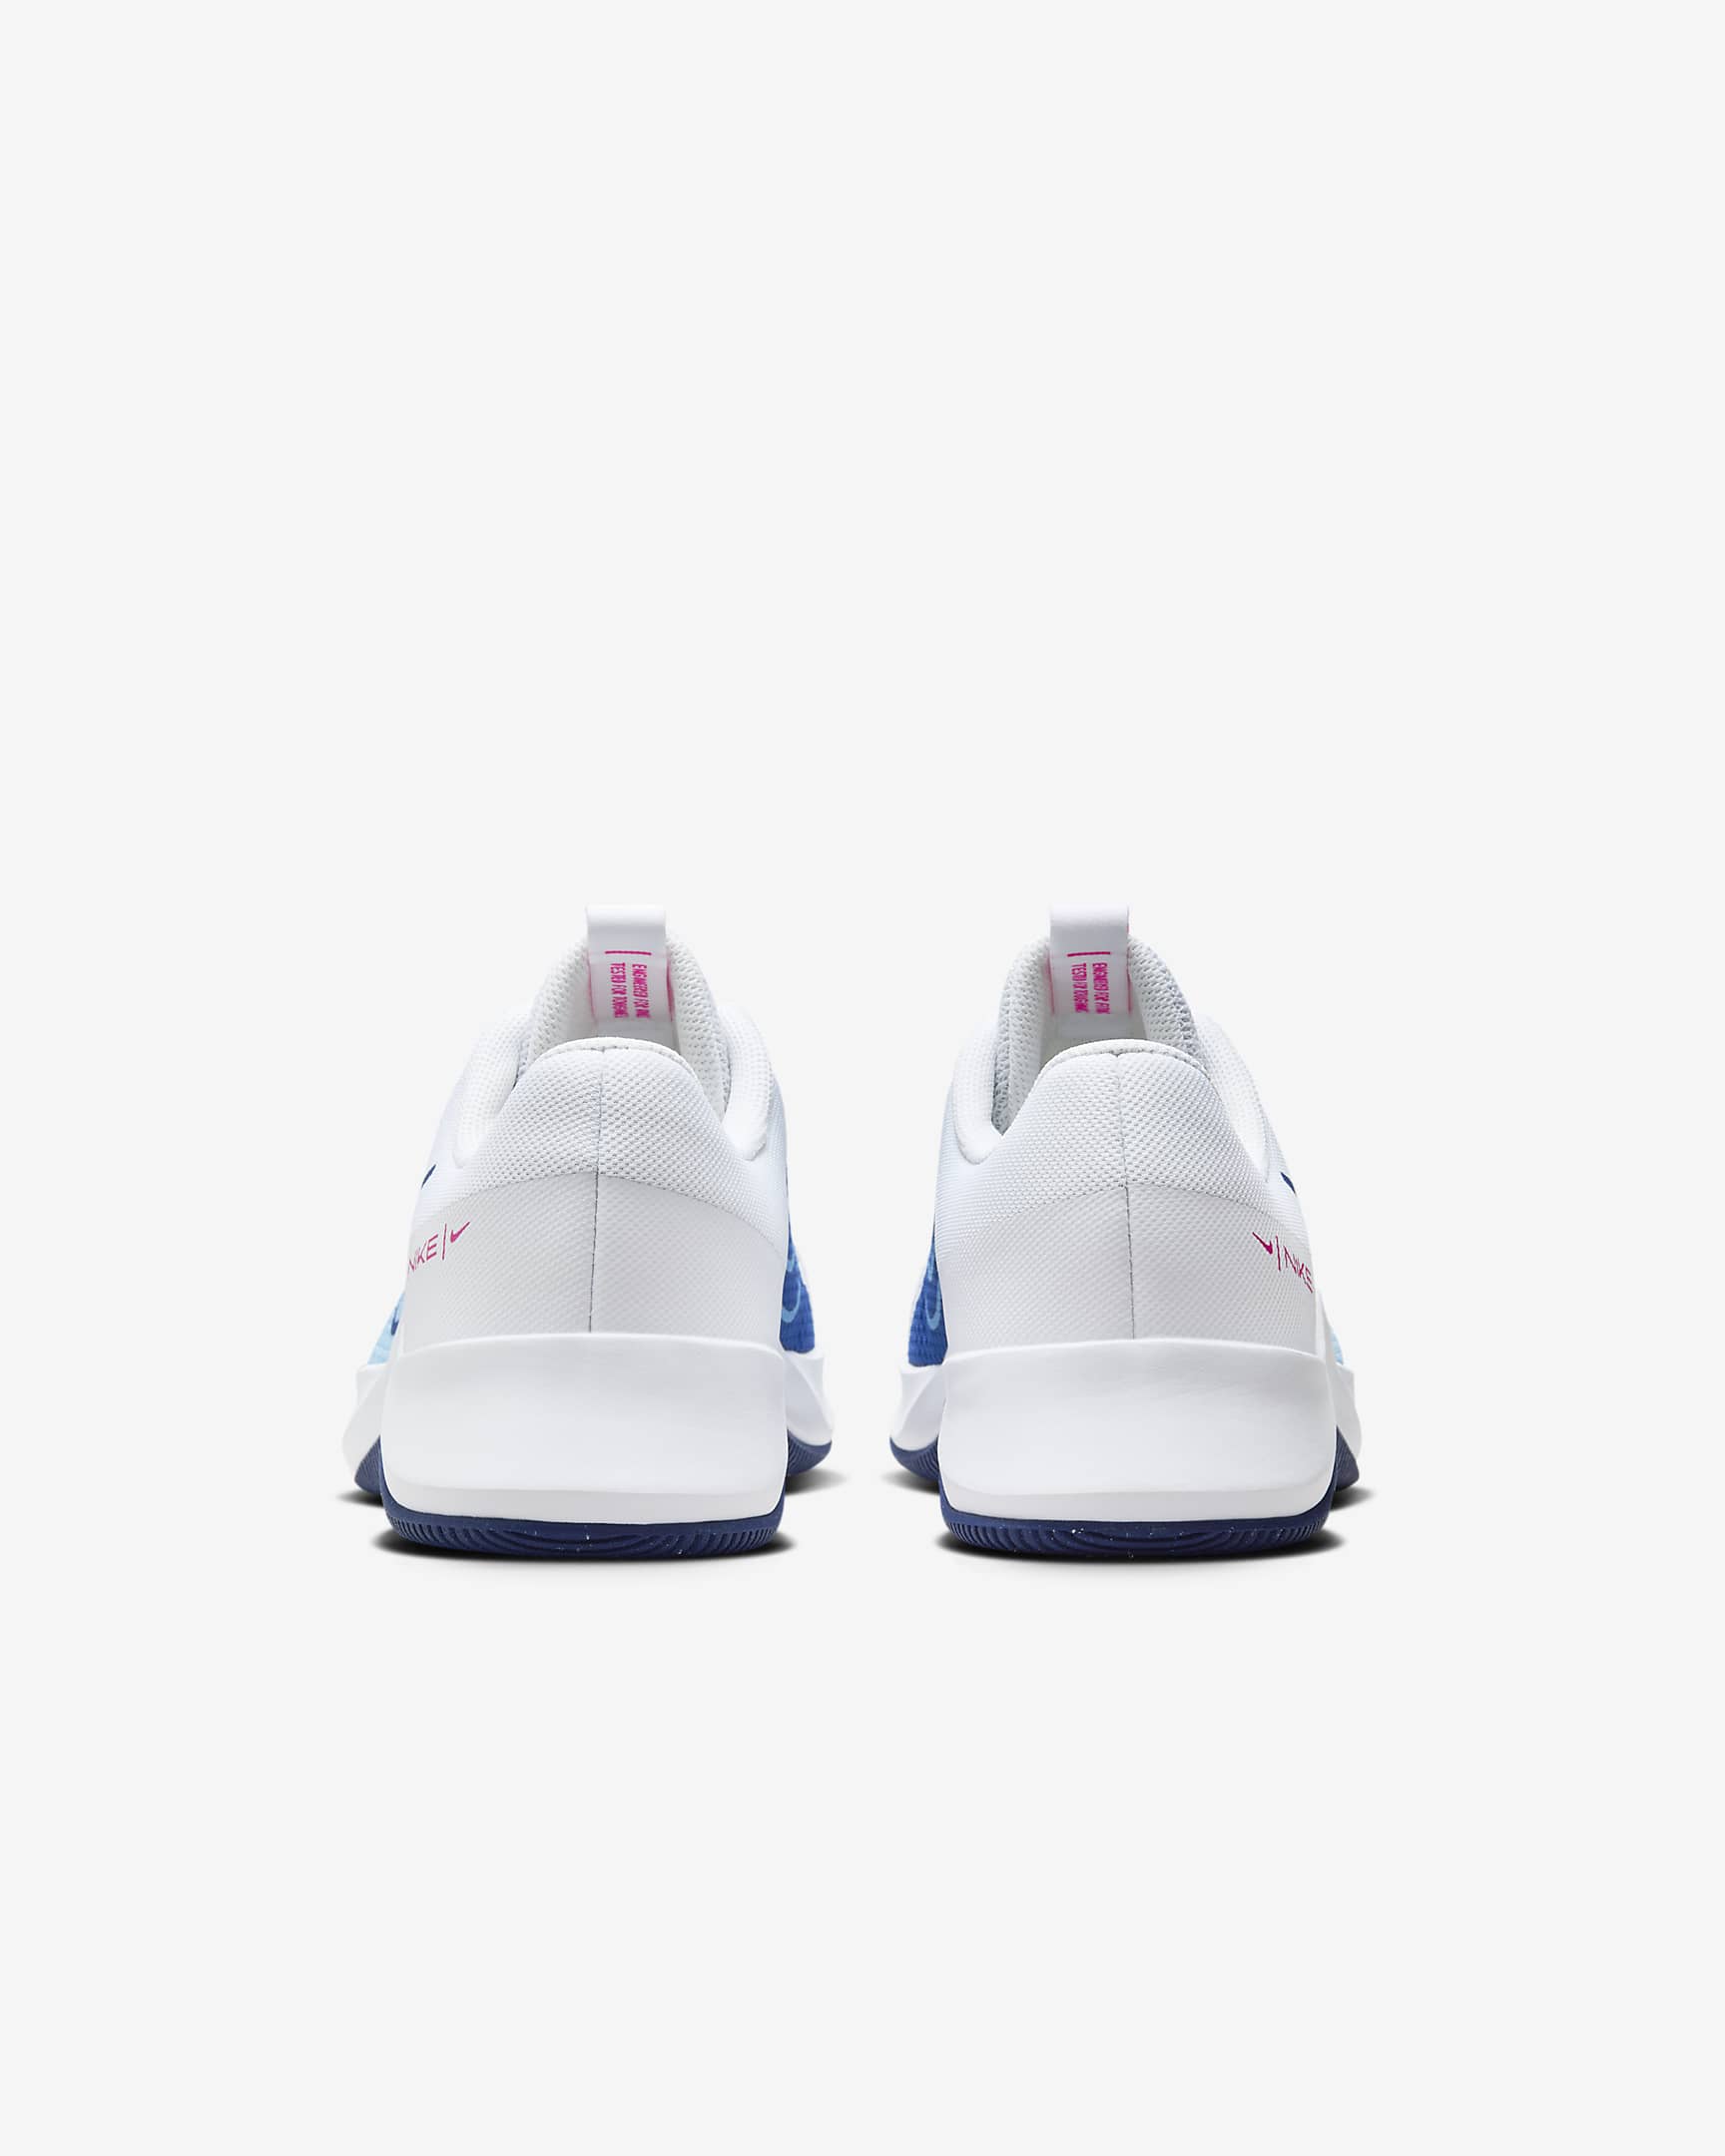 Nike MC Trainer 2 Men's Workout Shoes - White/Aquarius Blue/Fierce Pink/Deep Royal Blue